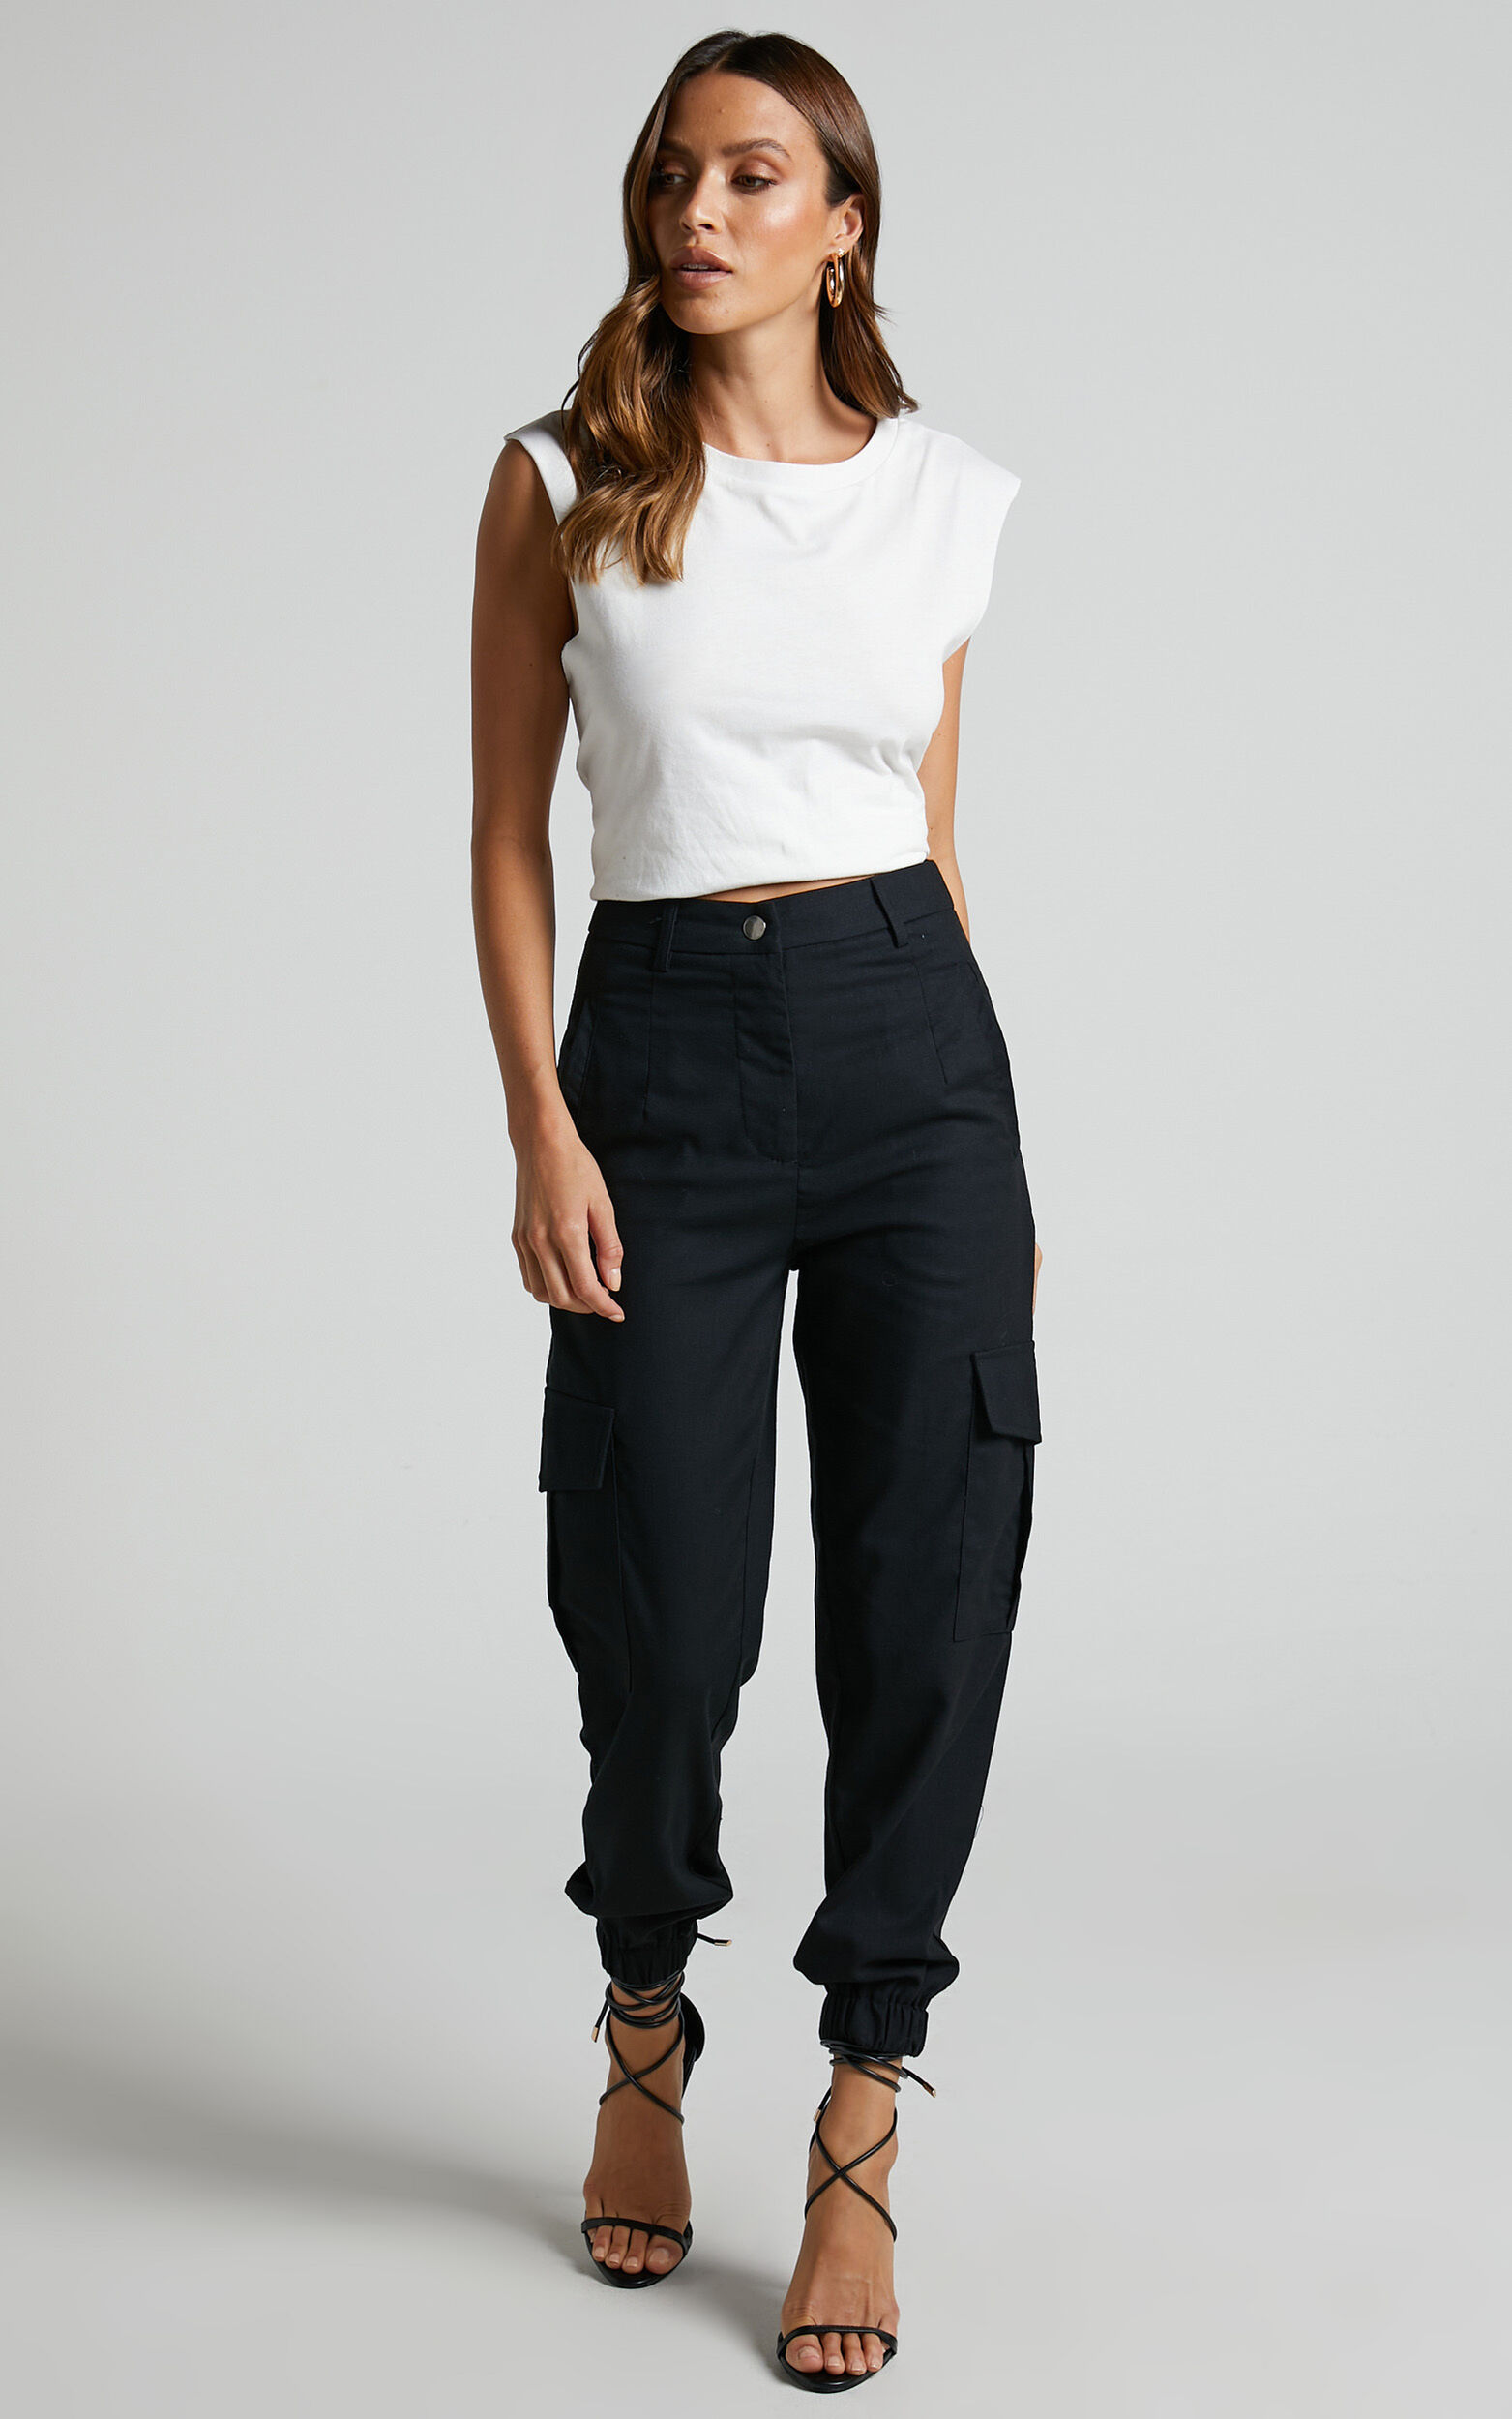 Kayla Pants - Mid Rise Cargo Pants in Black | Showpo USA